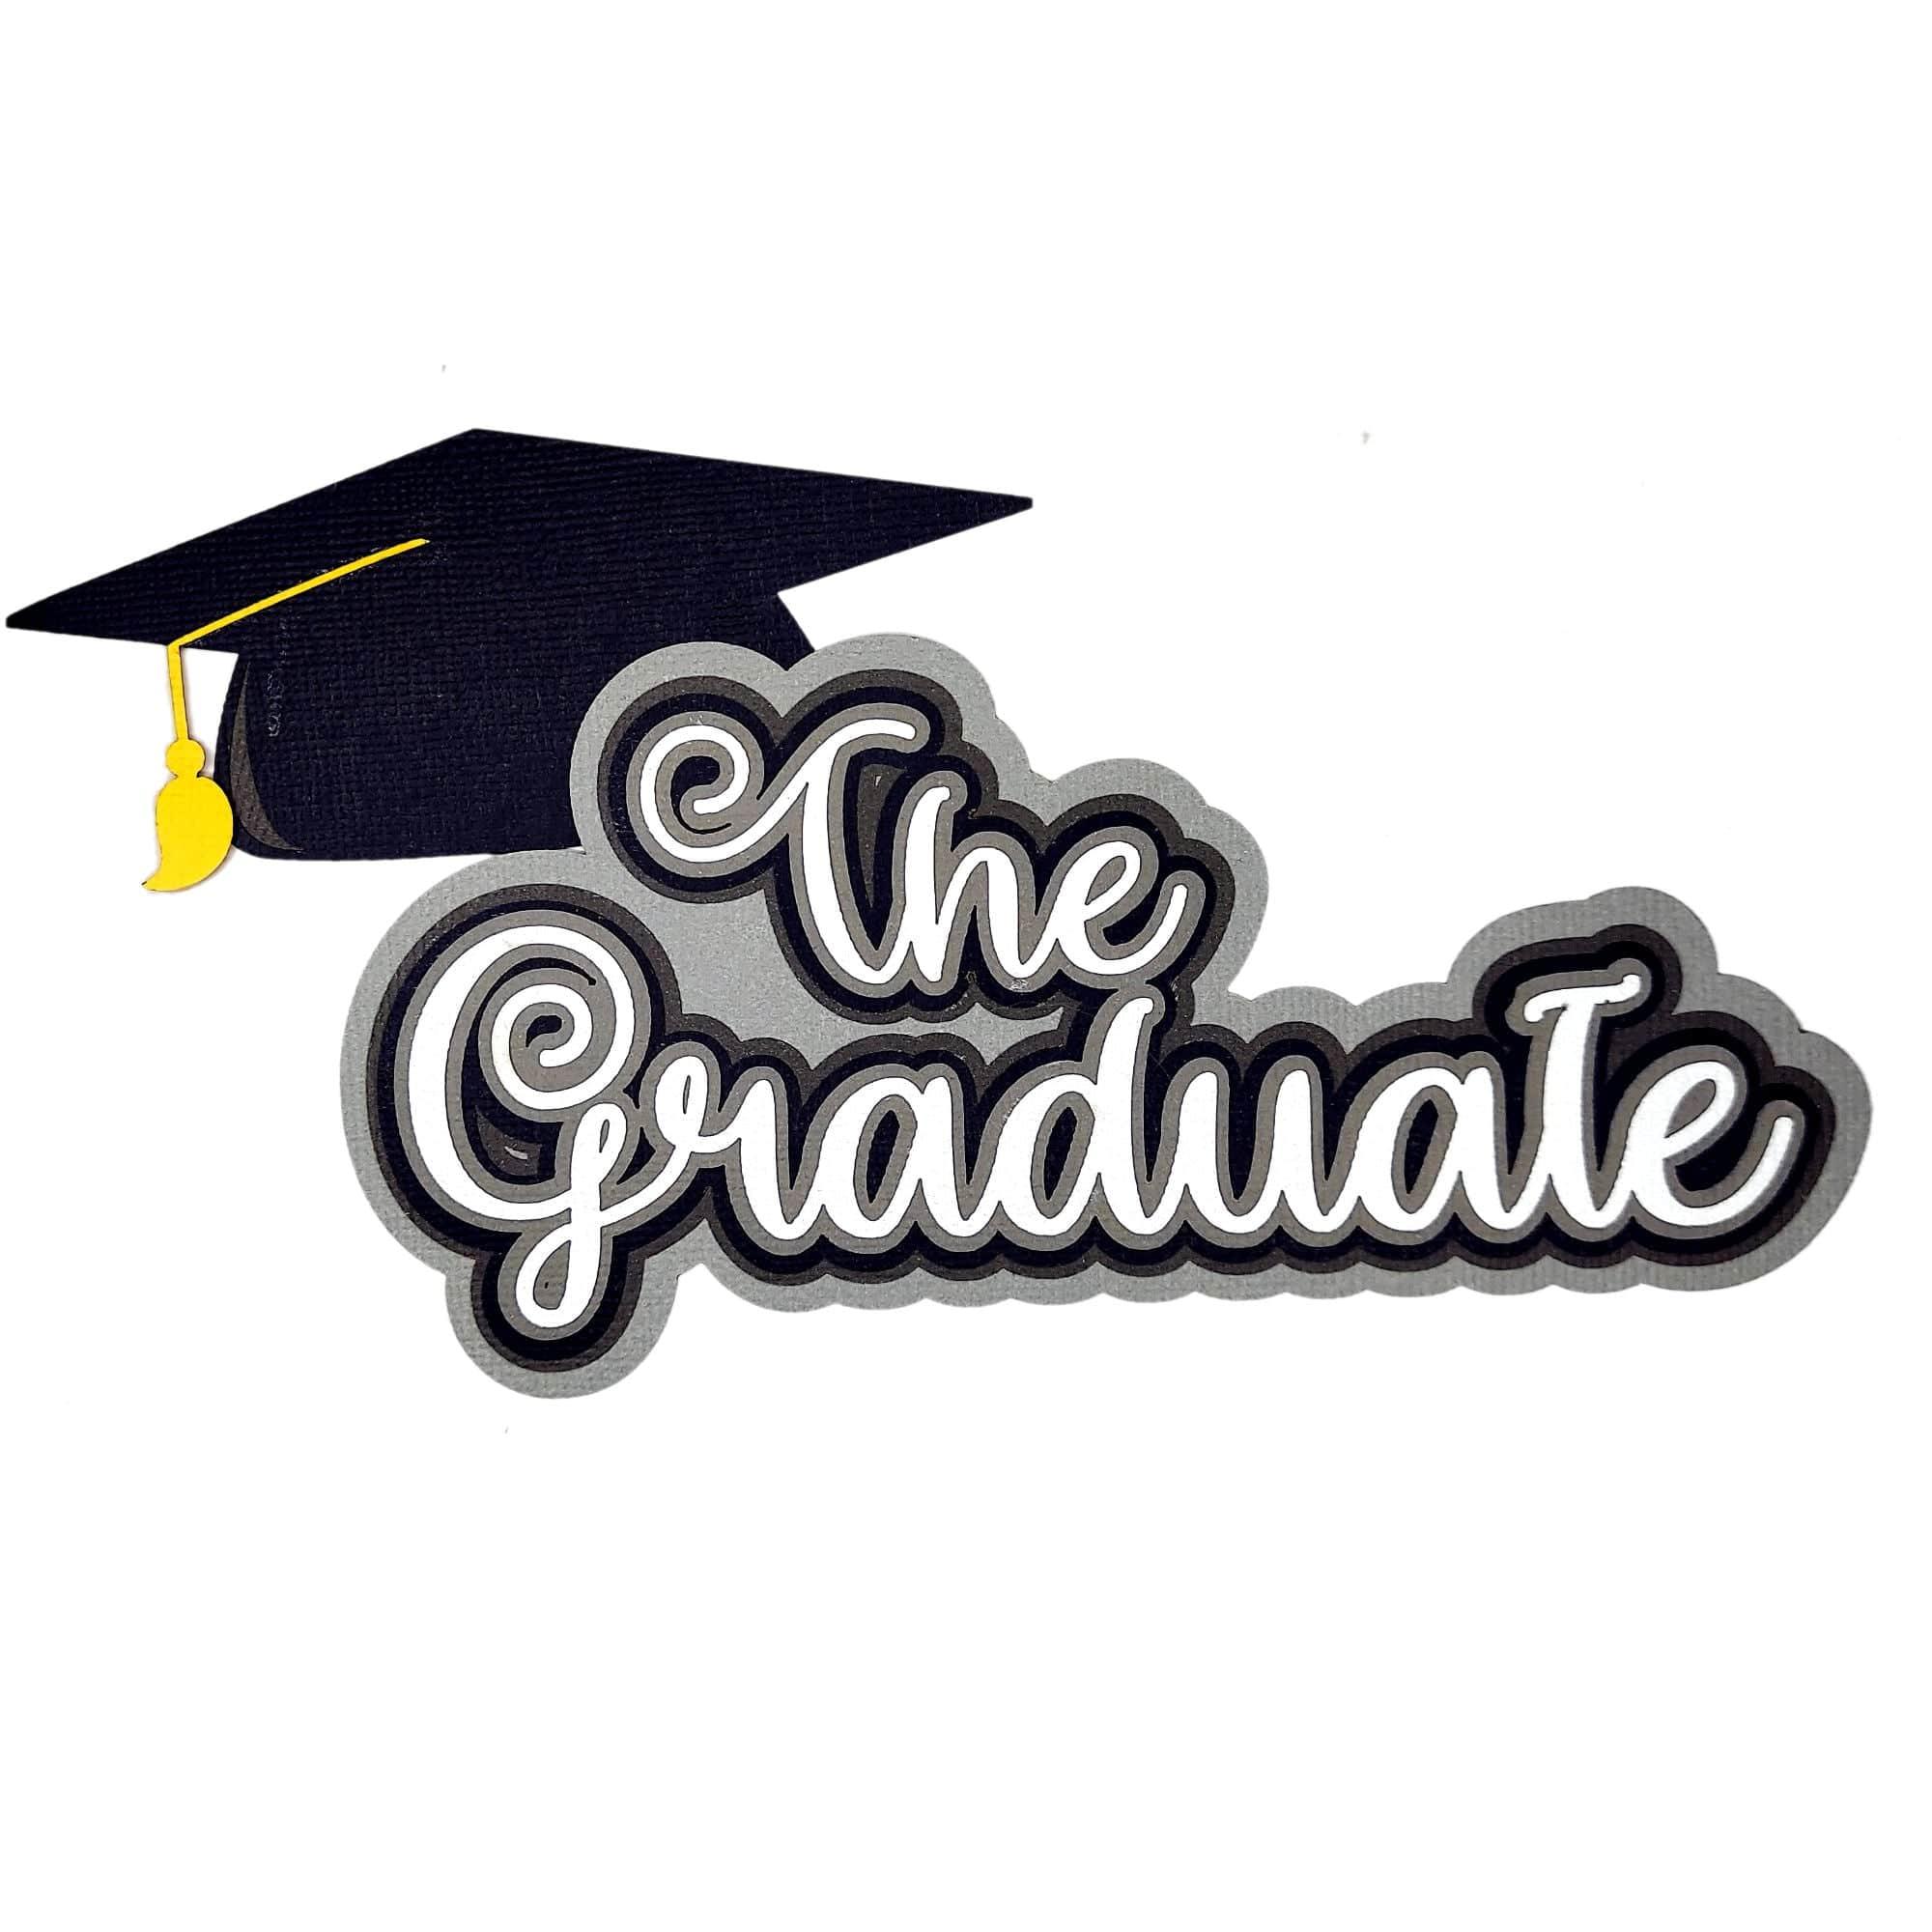 The Graduate Collection 3.5 x 7 The Graduate Title & Graduation Cap Fully-Assembled Laser Cut Scrapbook Embellishments by SSC Laser Designs